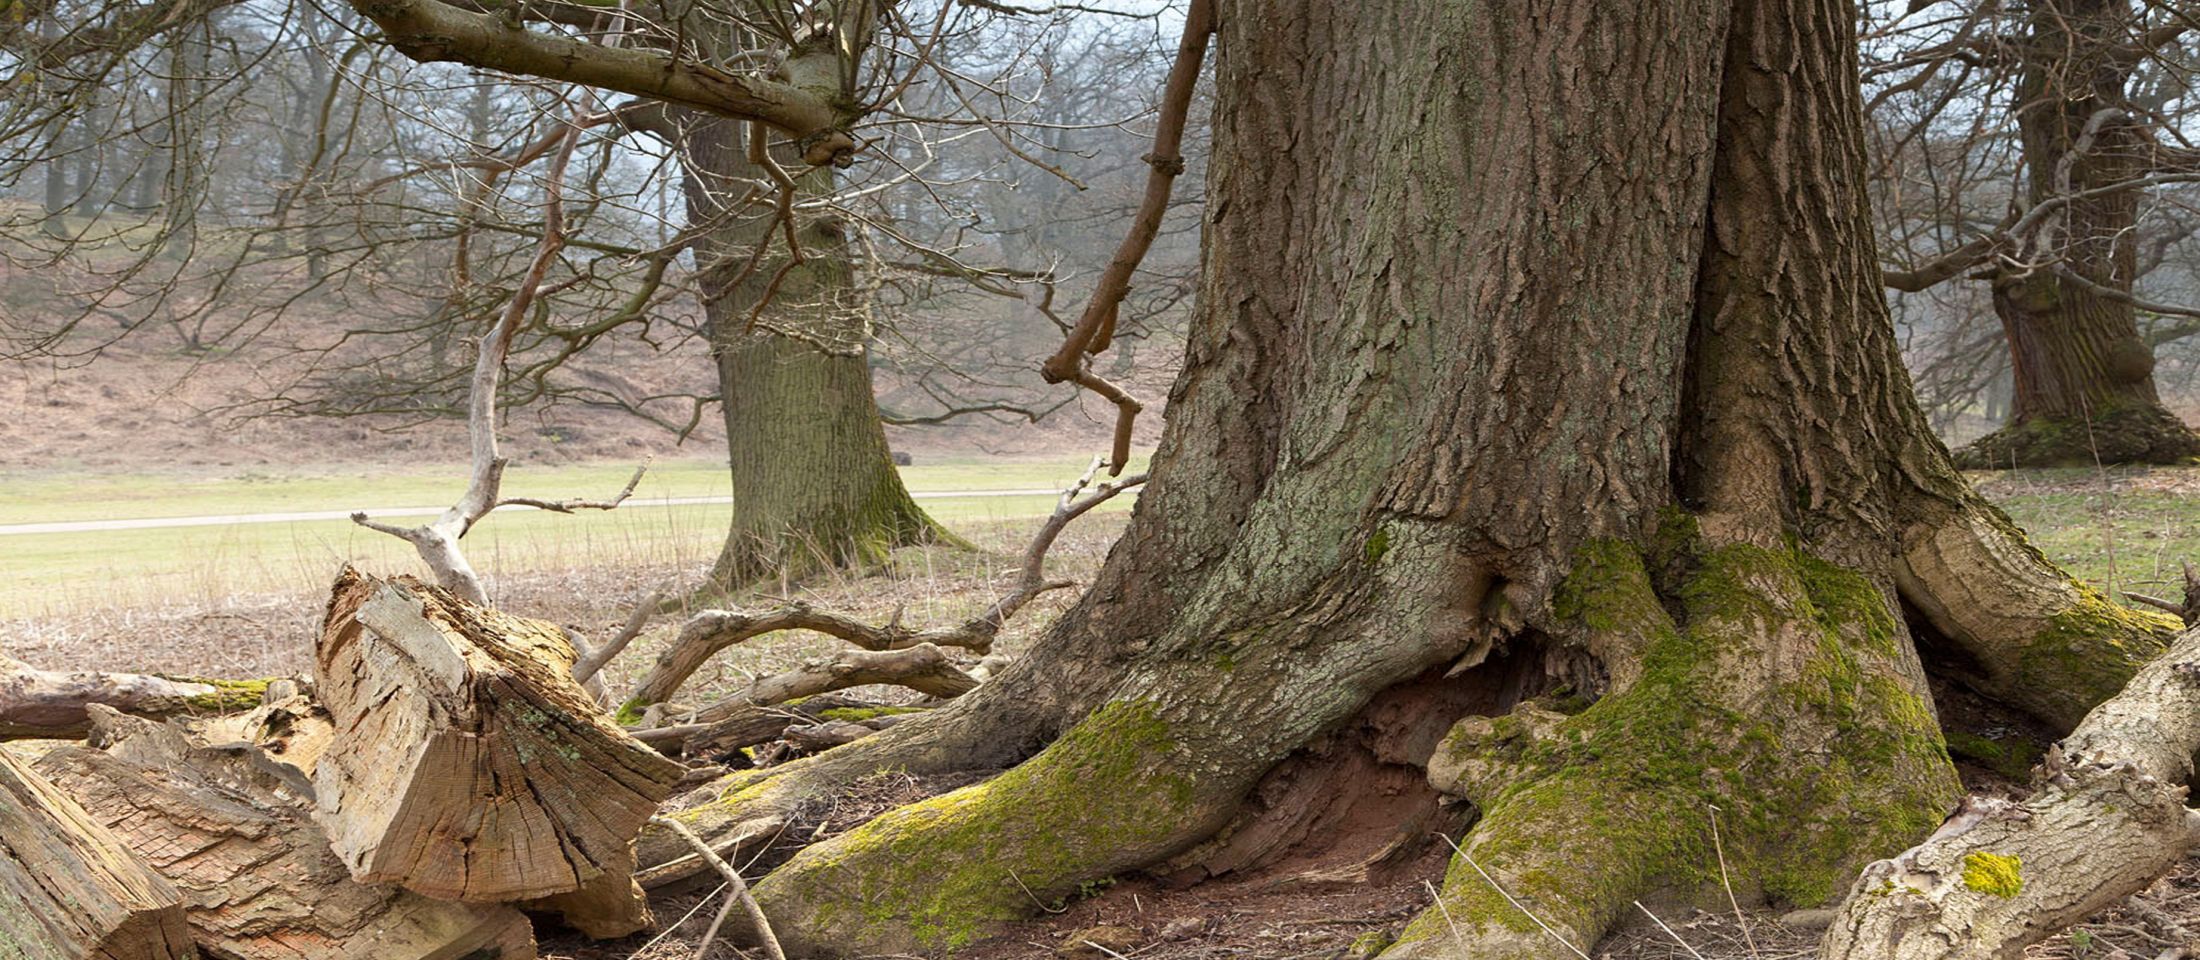 Ash tree near Ightham Mote and Knole, Kent. Photo: John Miller.